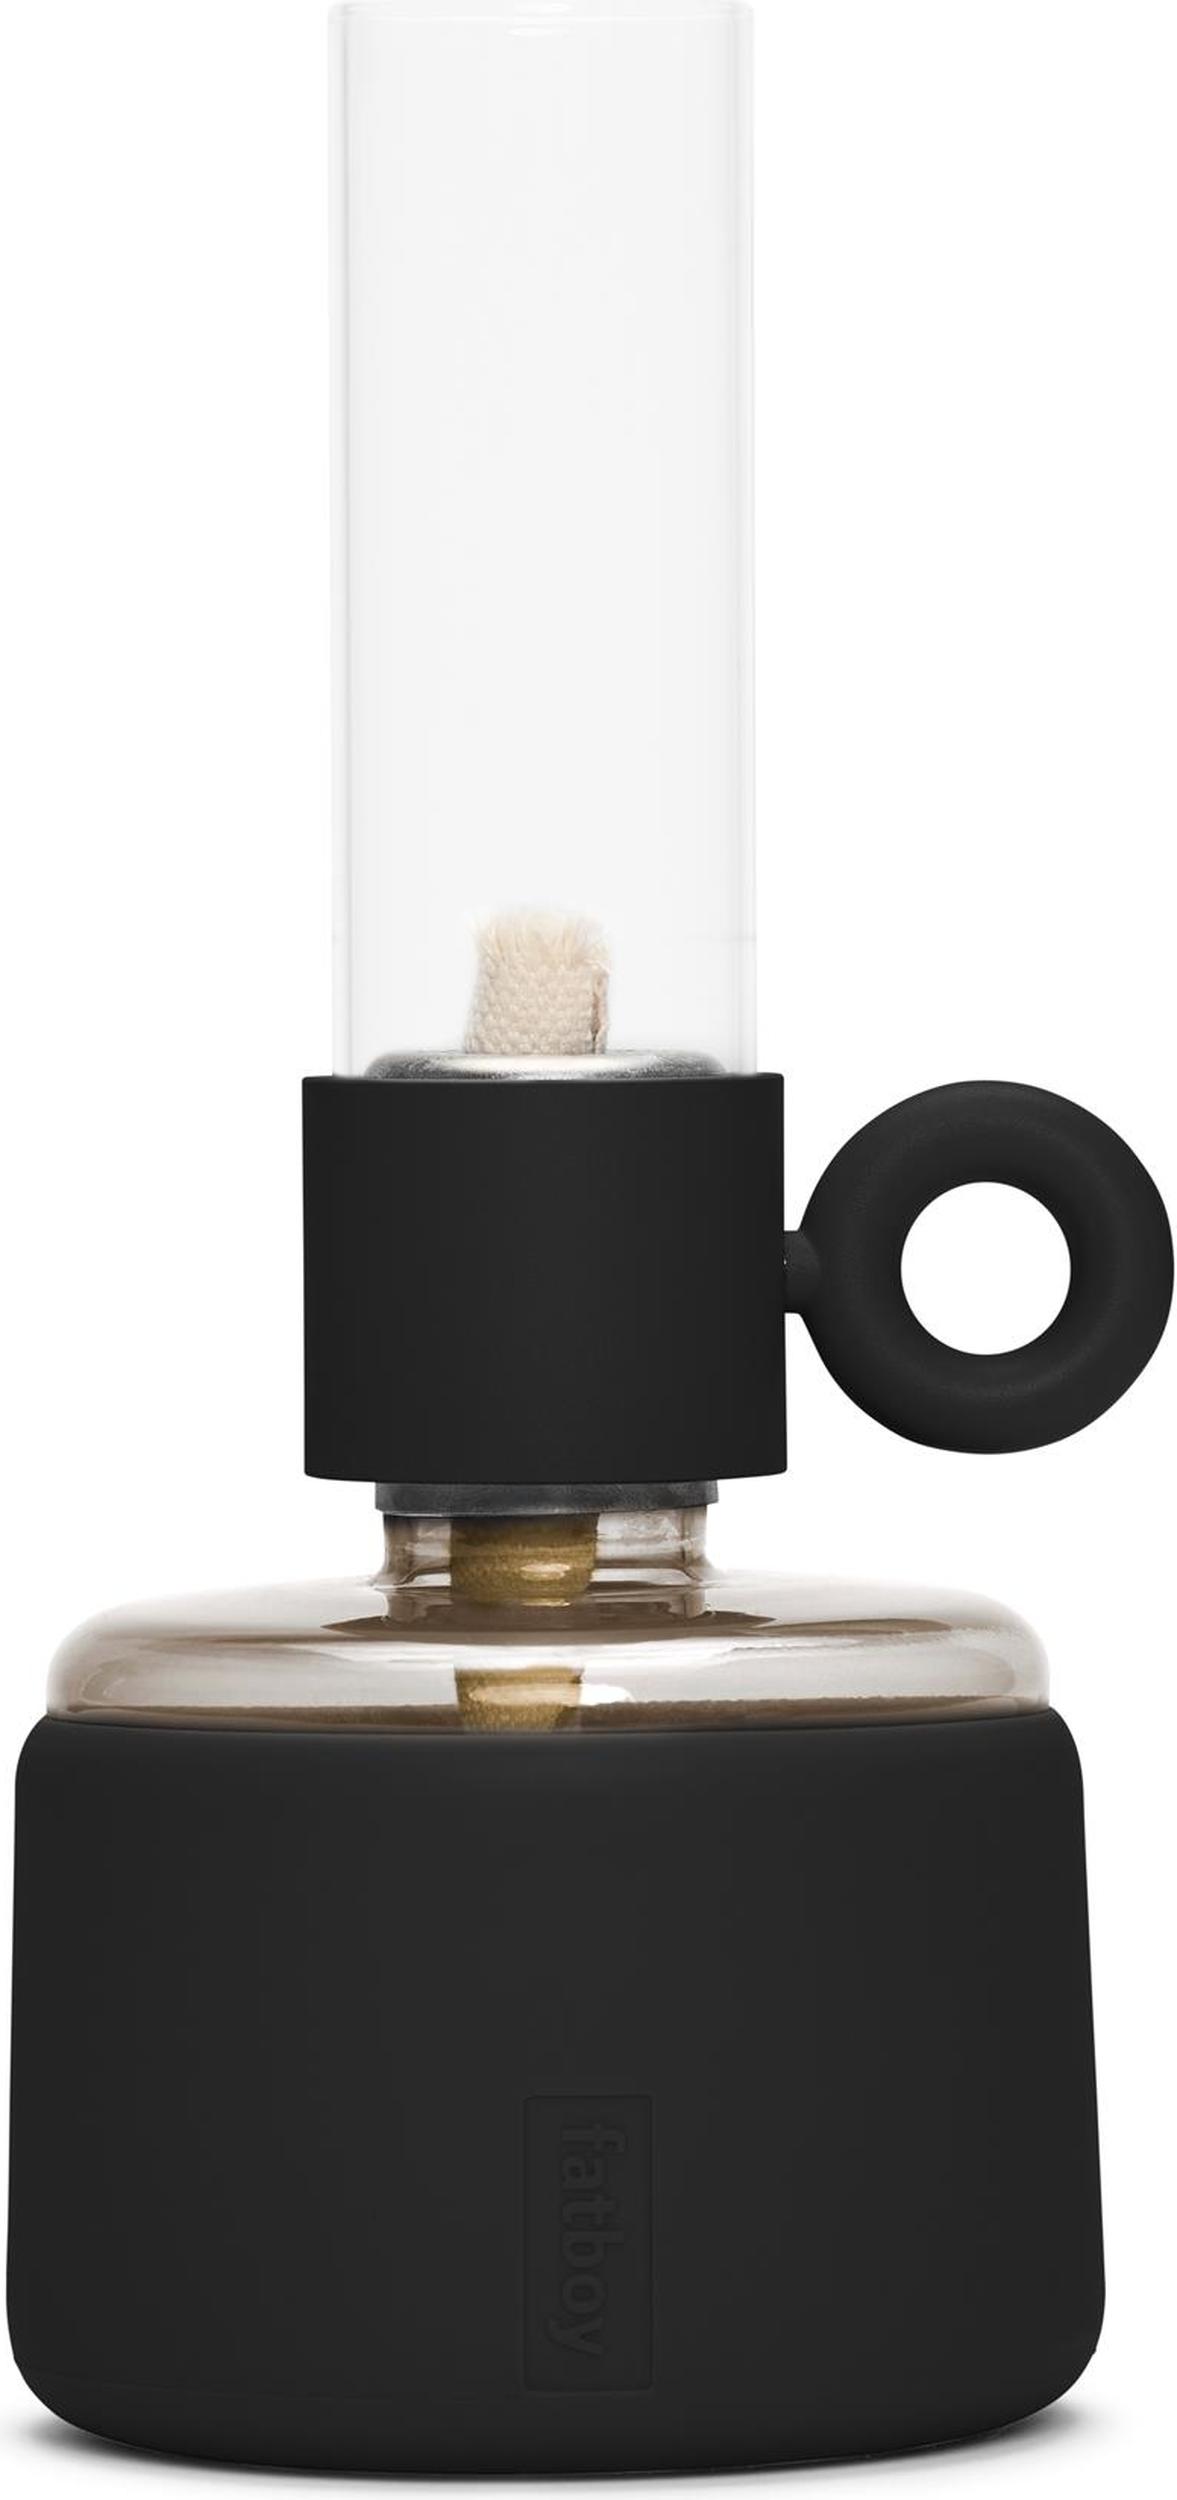 Flamtastique Oil lamp wicks XS 5 pcs - Fatboy 105158